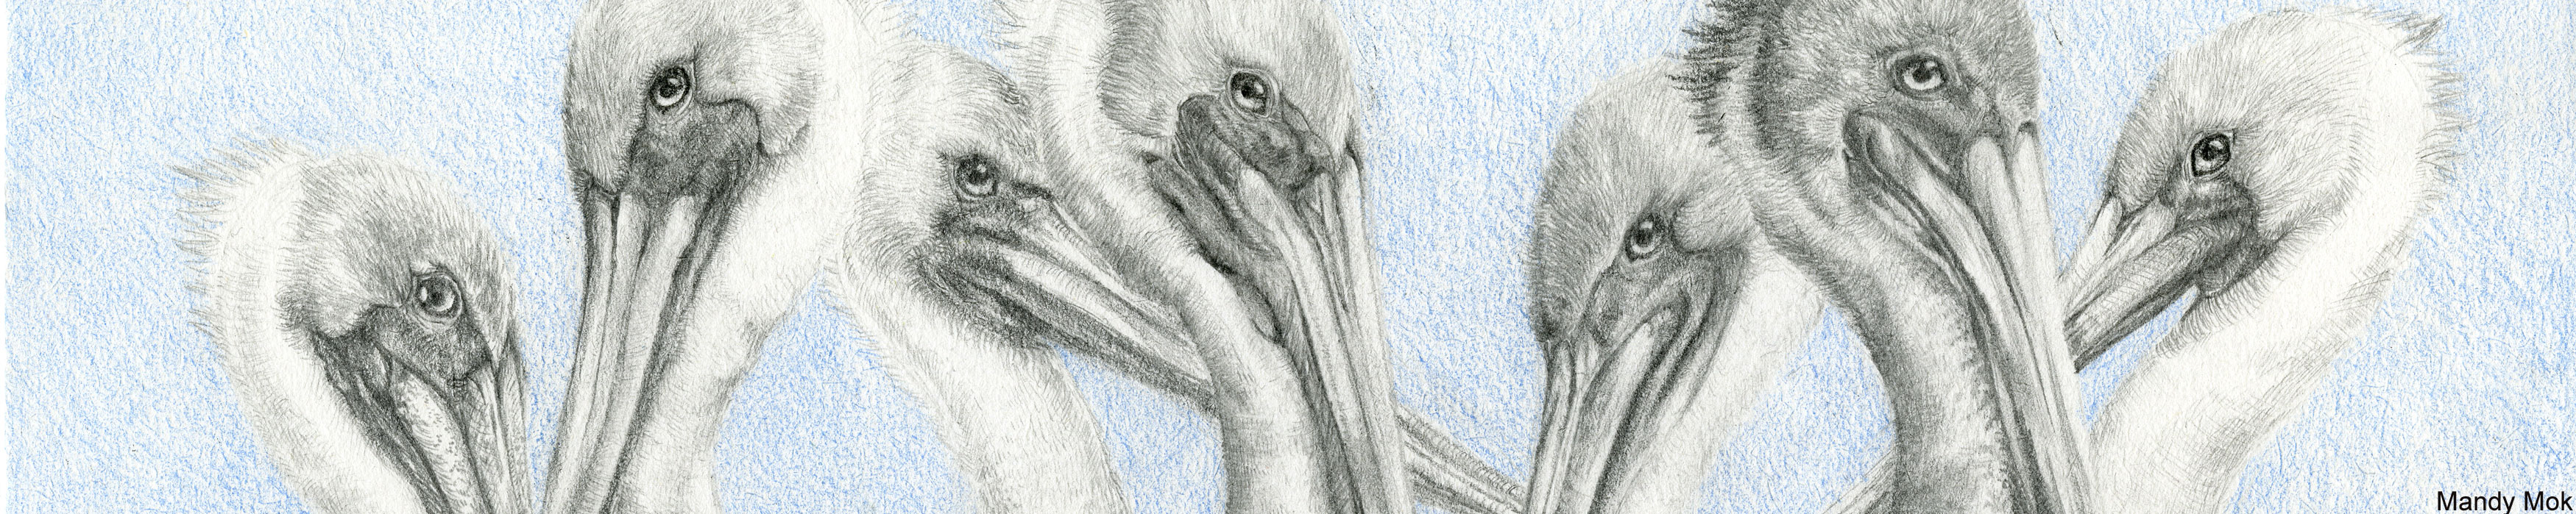 Pelican drawing by Mandy Mok